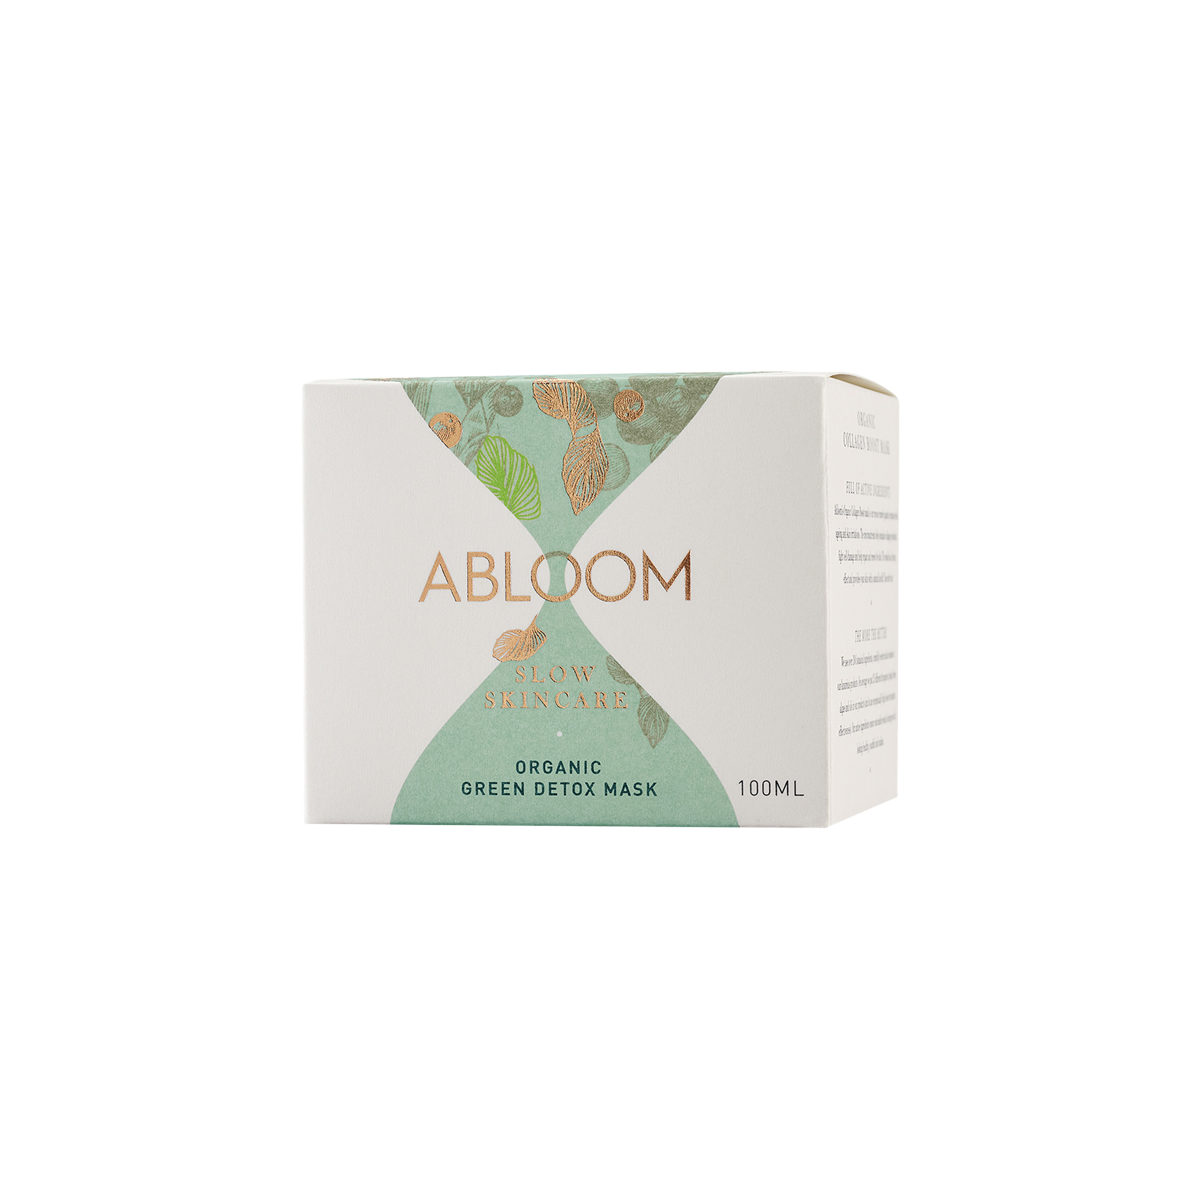 ABLOOM - Organic Green Detox Mask